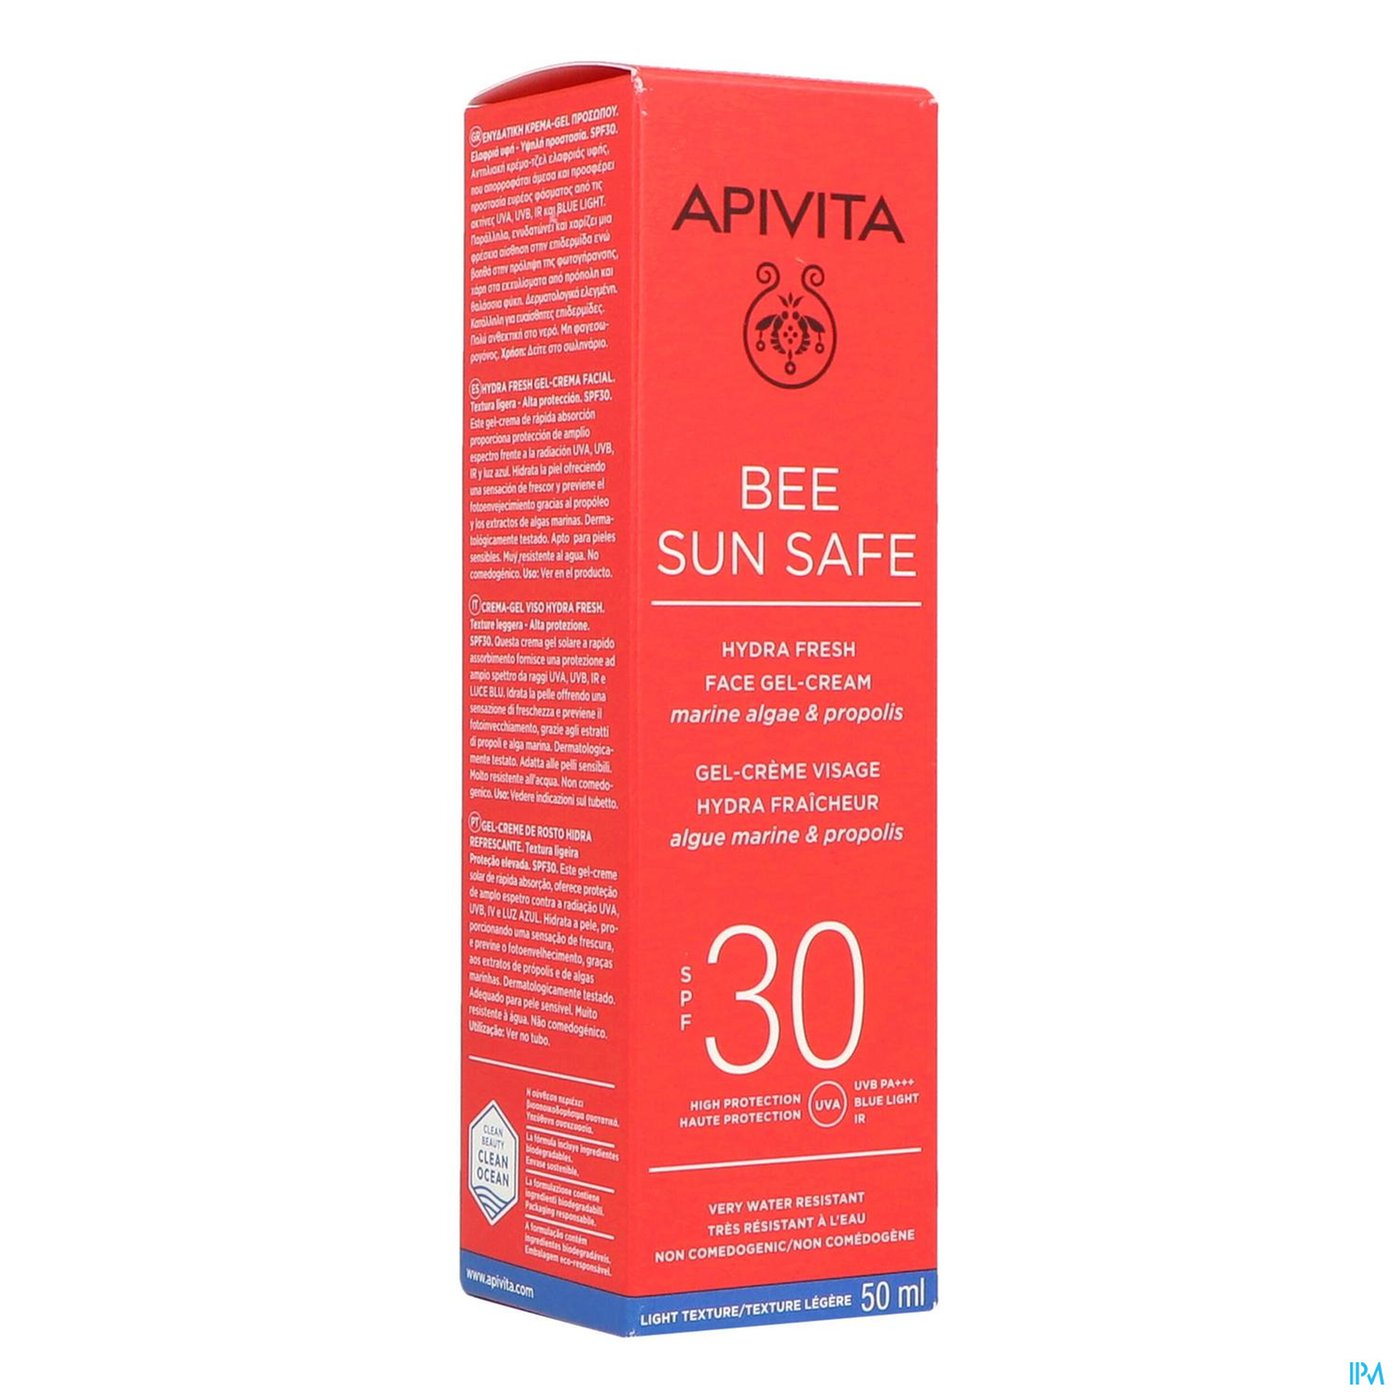 Apivita Hydra Fresh Face Gel-cream Ip30 50ml packshot